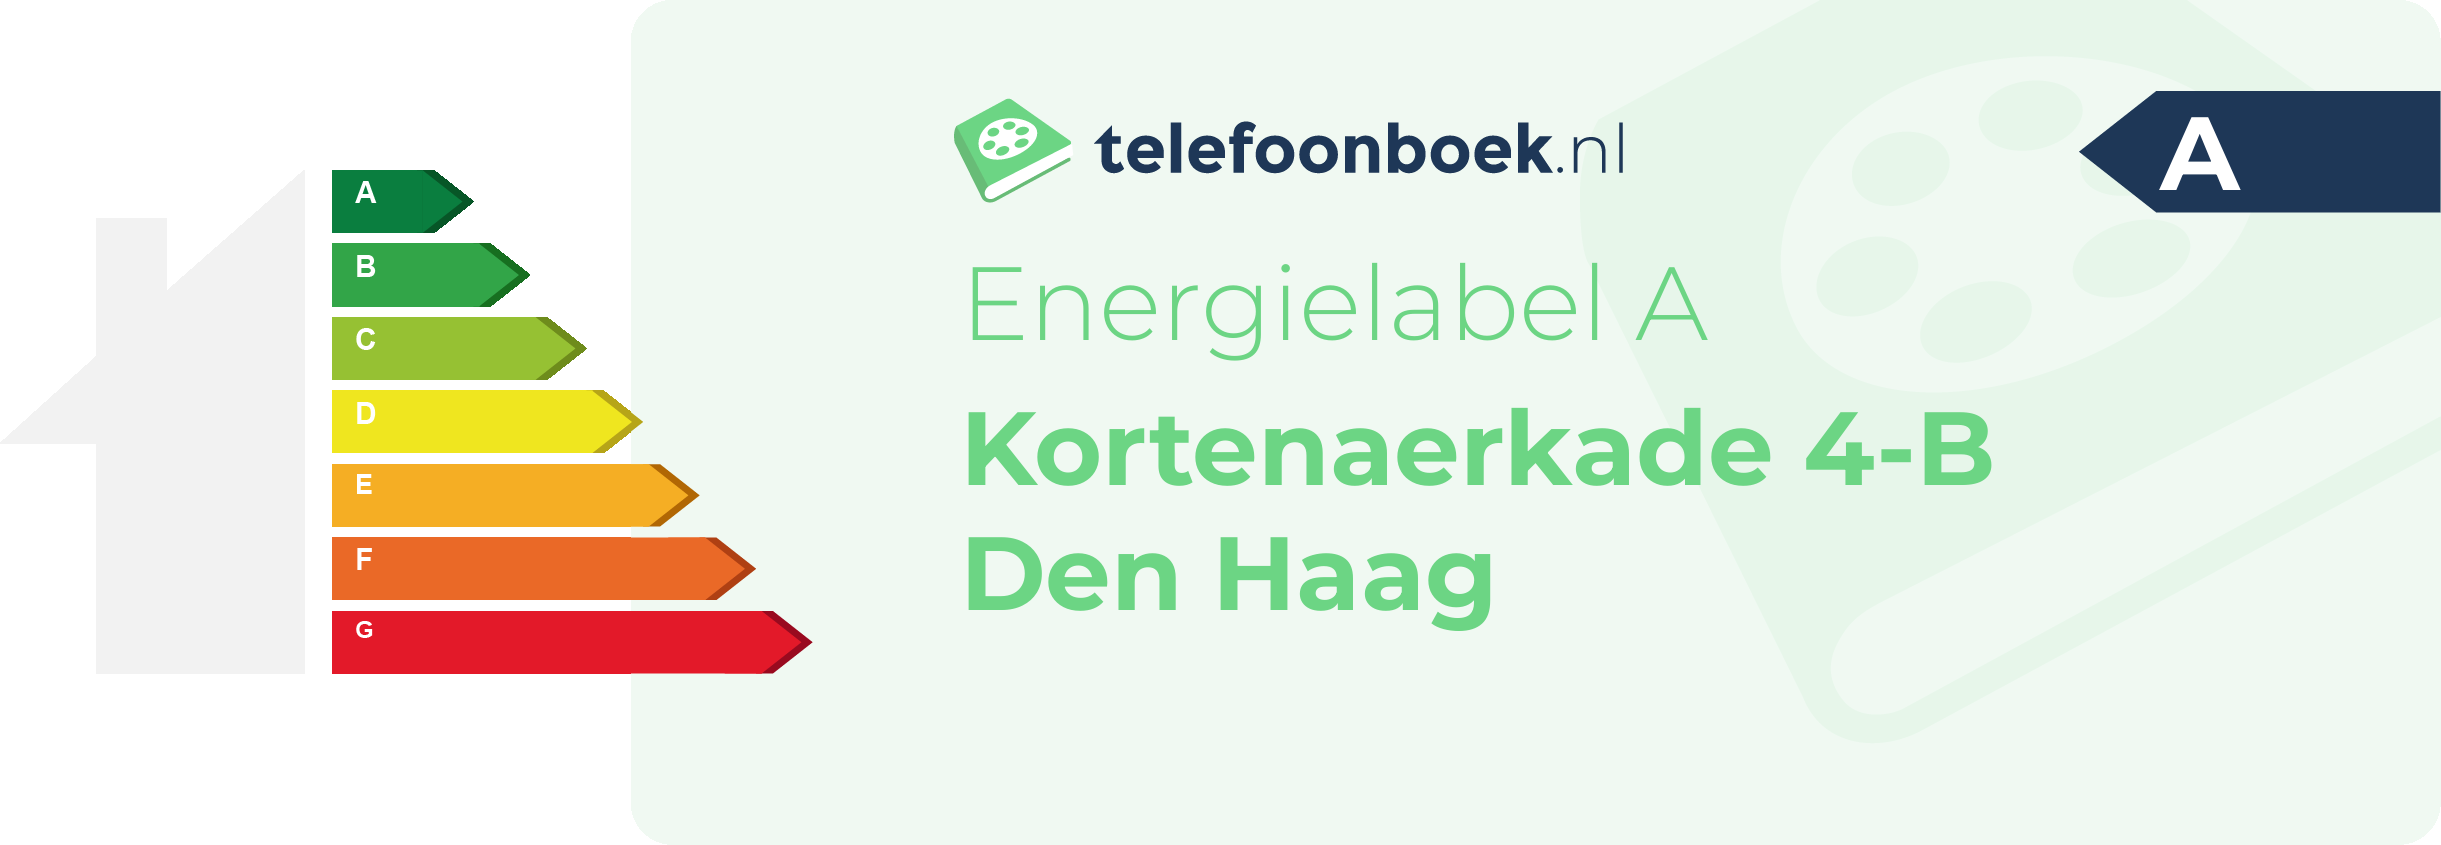 Energielabel Kortenaerkade 4-B Den Haag